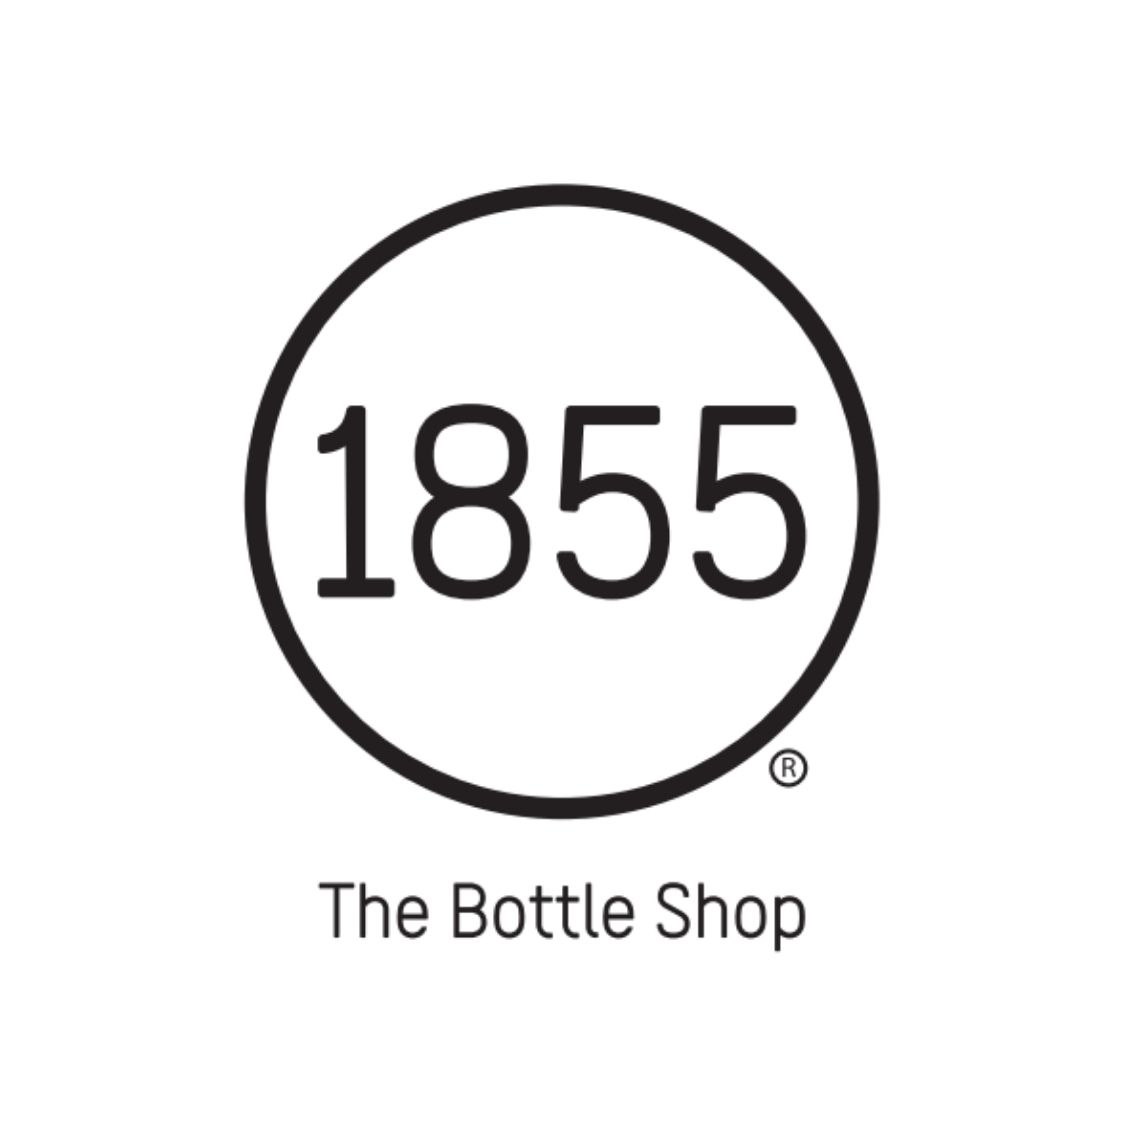 1855 The Bottle Shop Logo.jpg